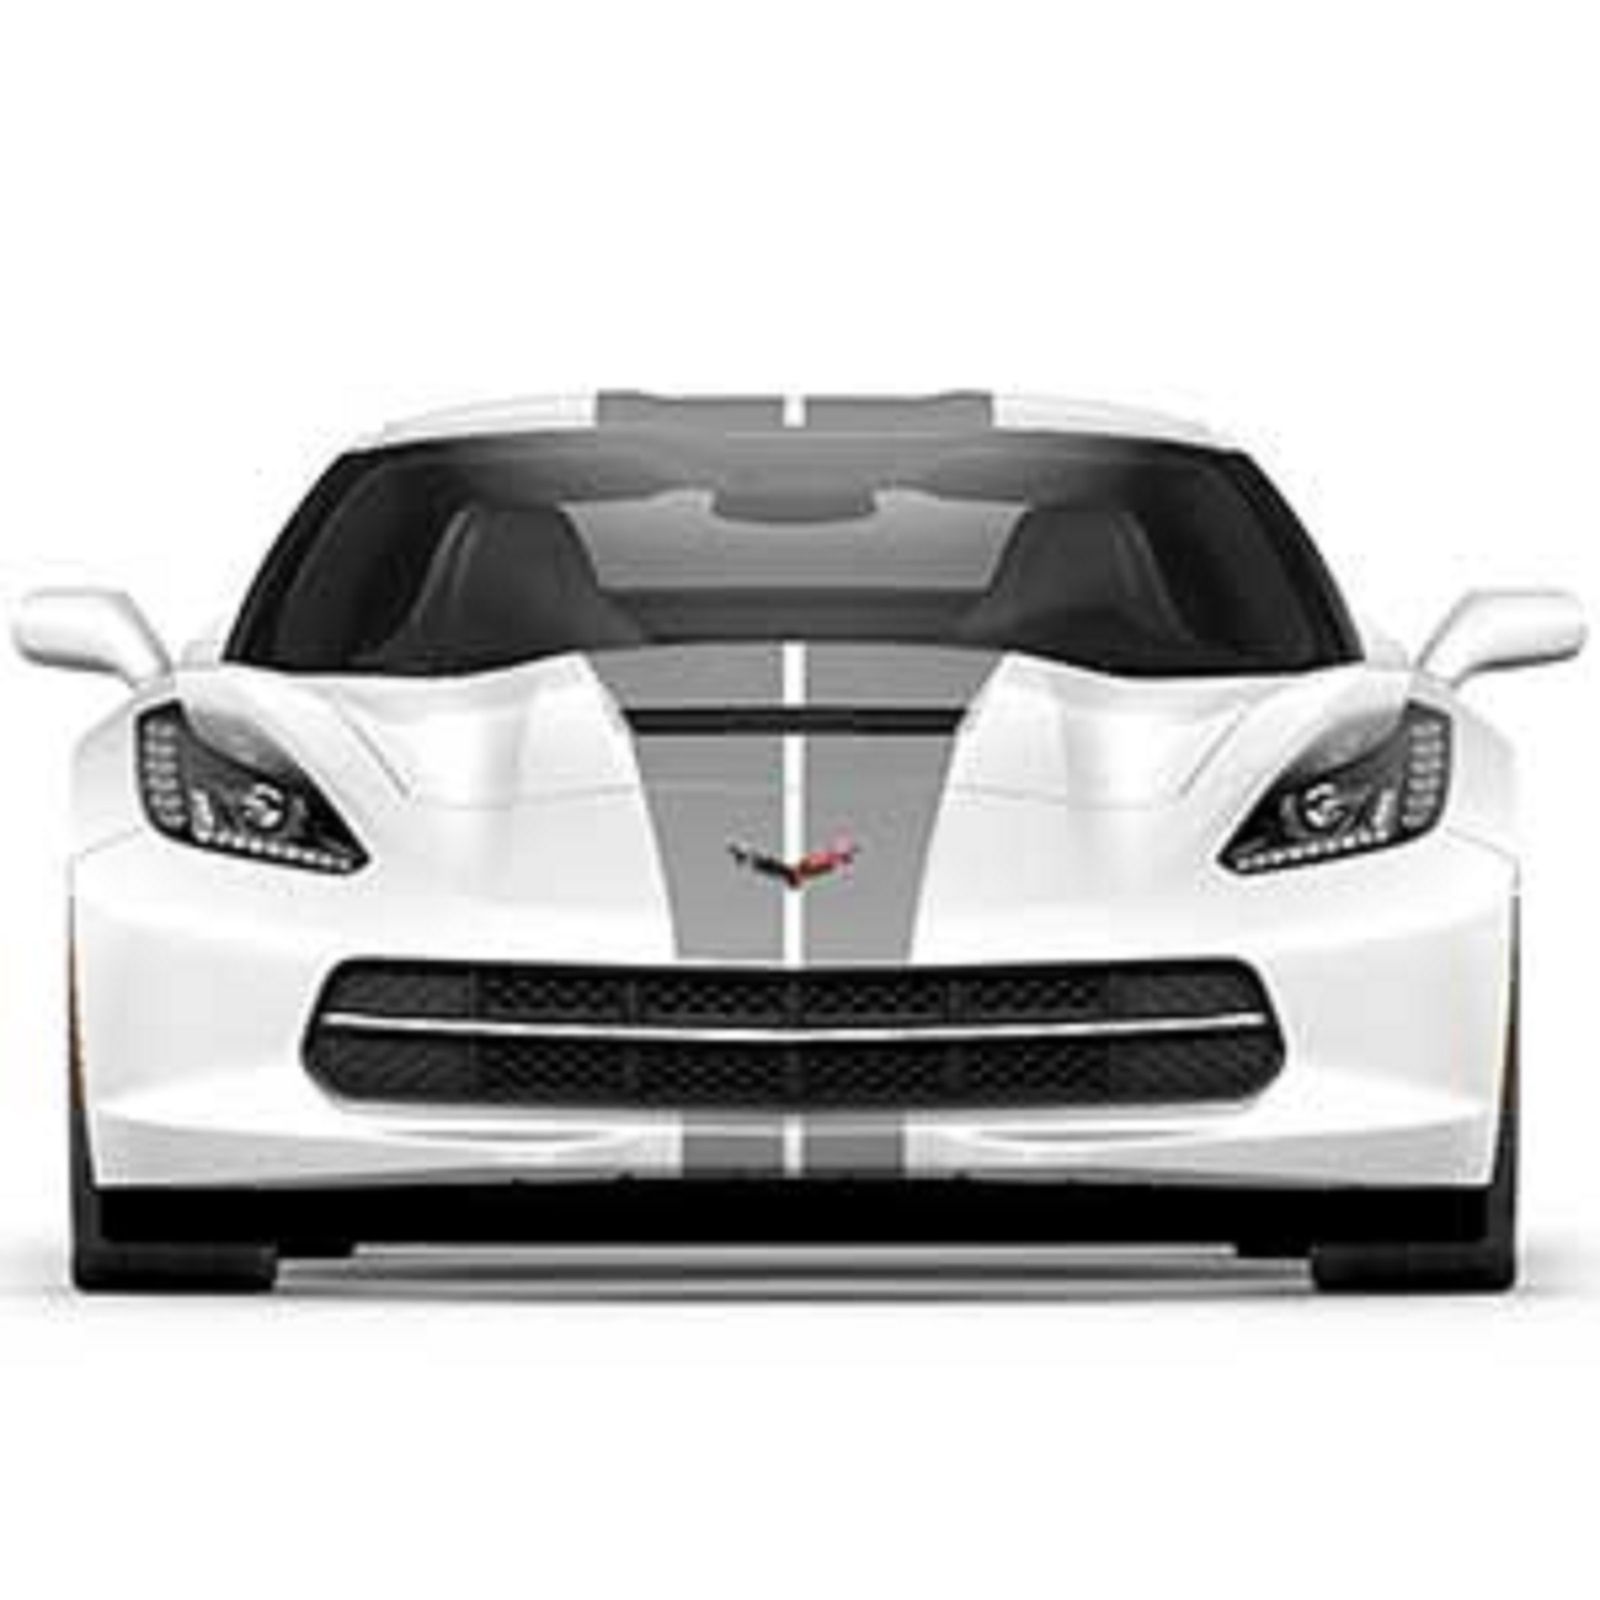 C7 Corvette Hood GM OEM Full Length Racing Stripe Package, Single Color, Silver Colored